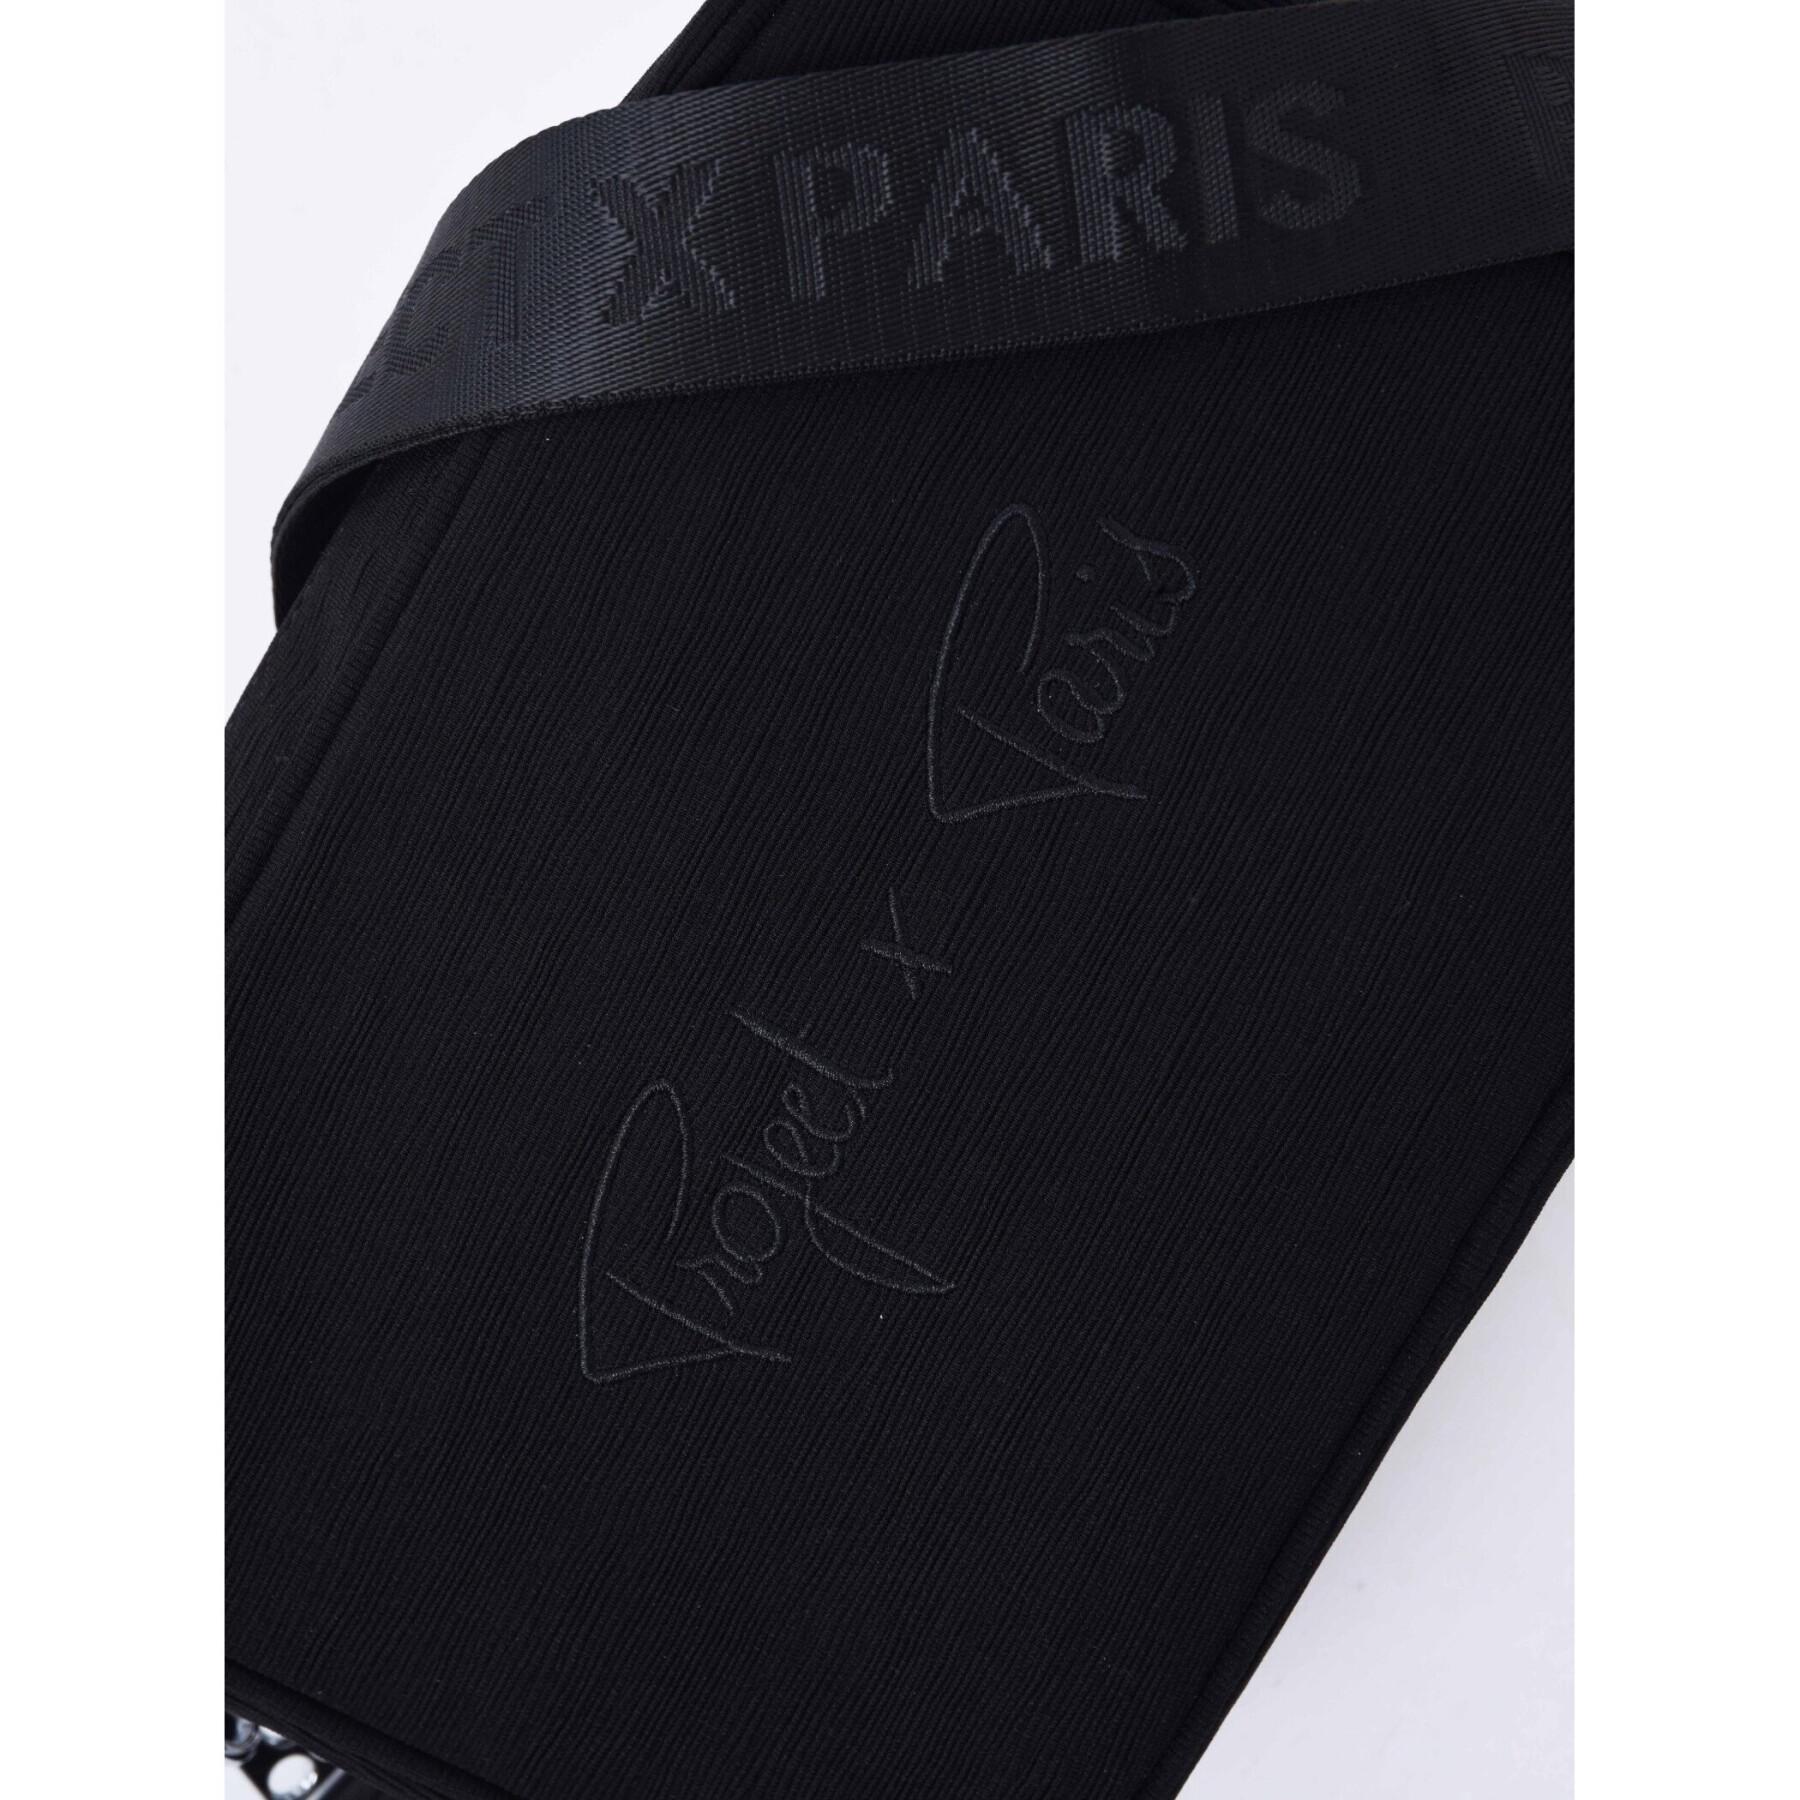 Shoulder bag Project X Paris